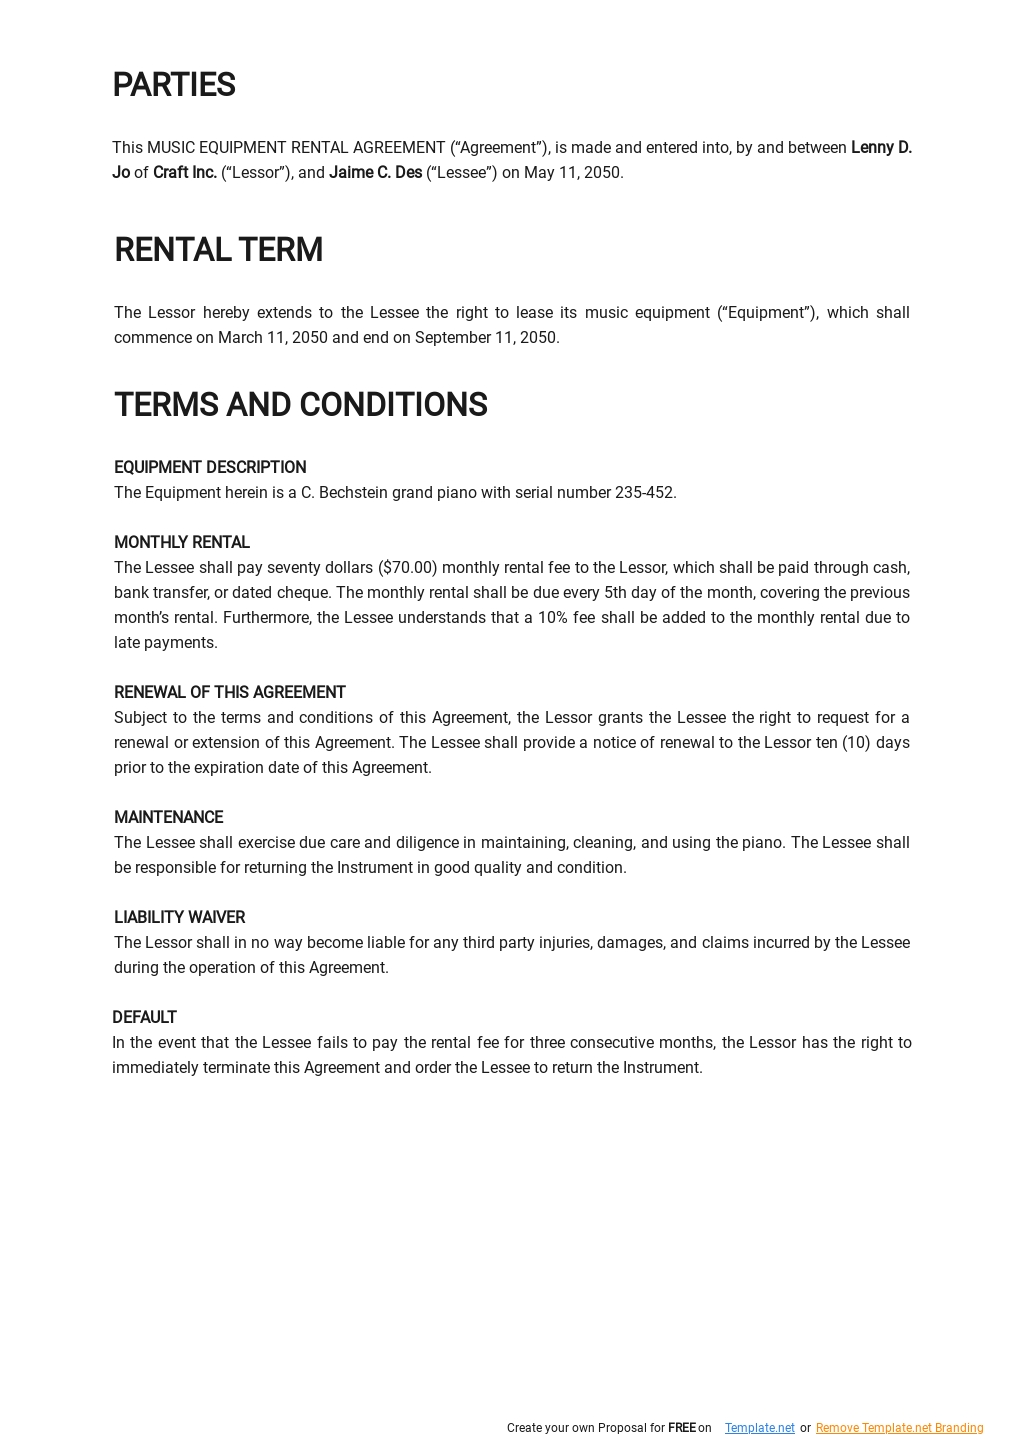 Music Equipment Rental Agreement Template - Google Docs, Word With Regard To music equipment rental agreement template